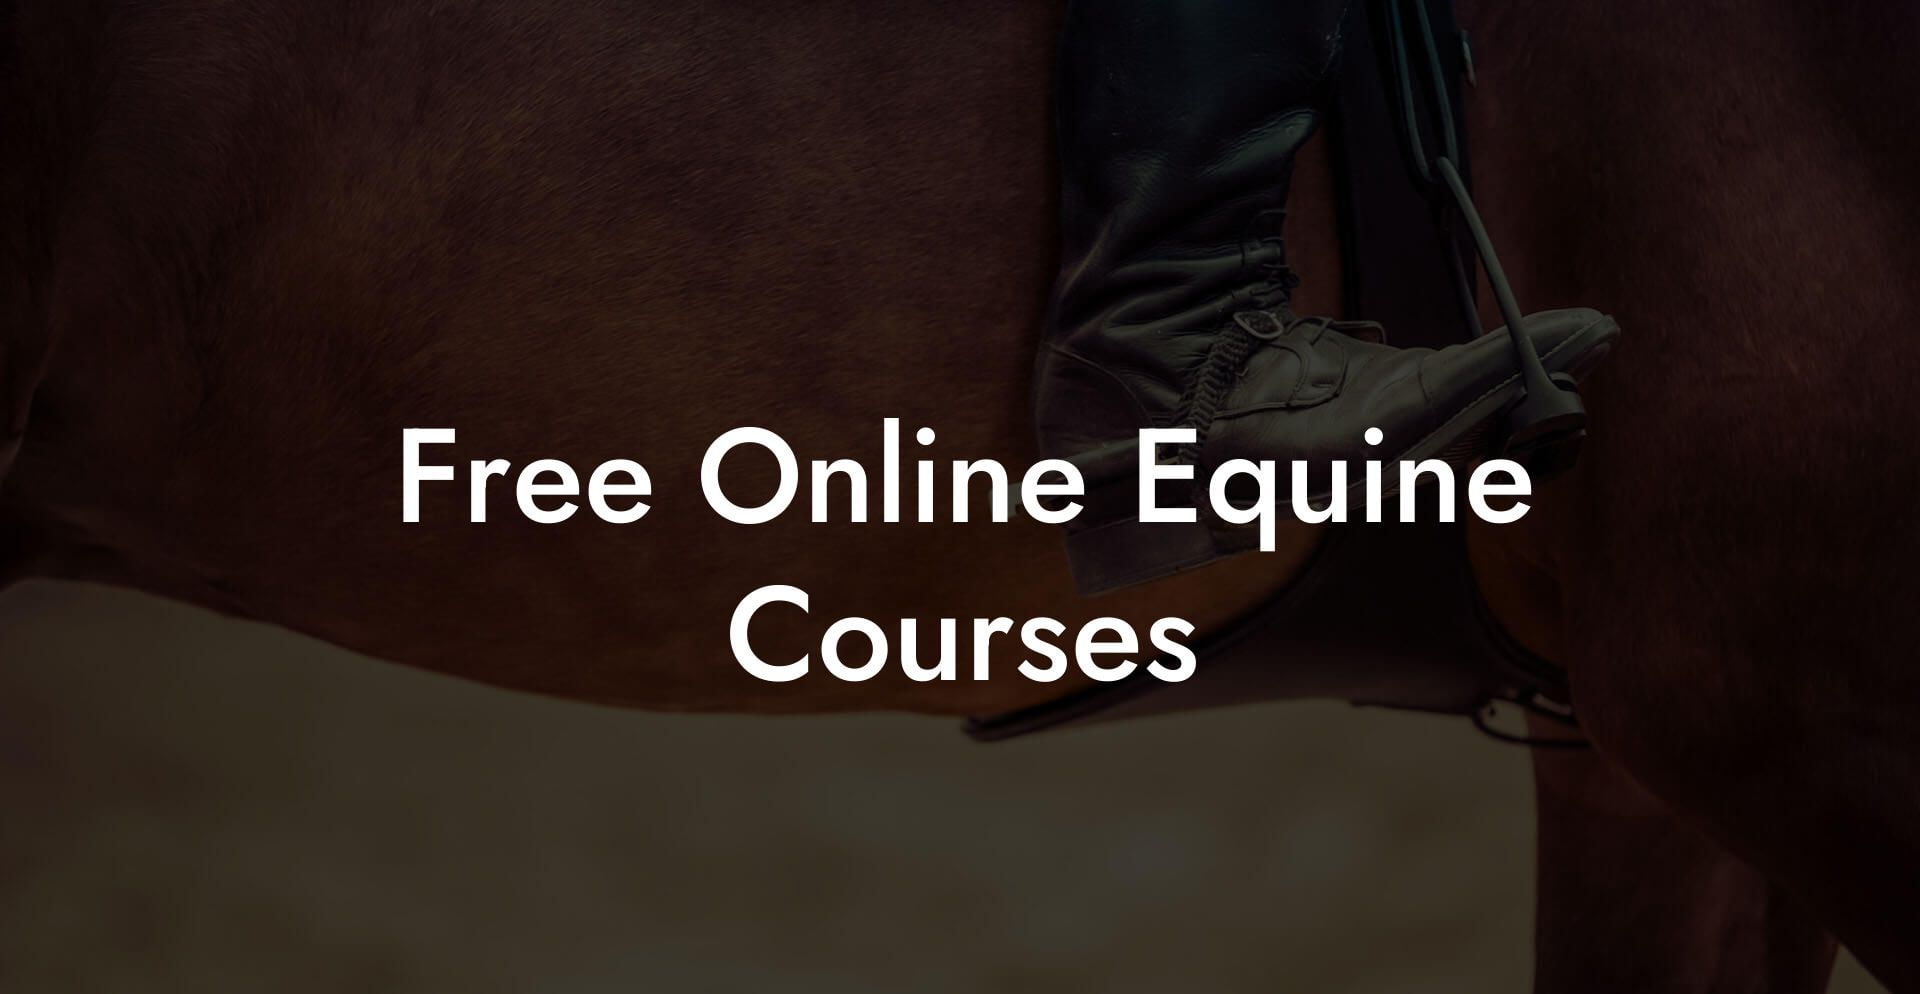 Free Online Equine Courses